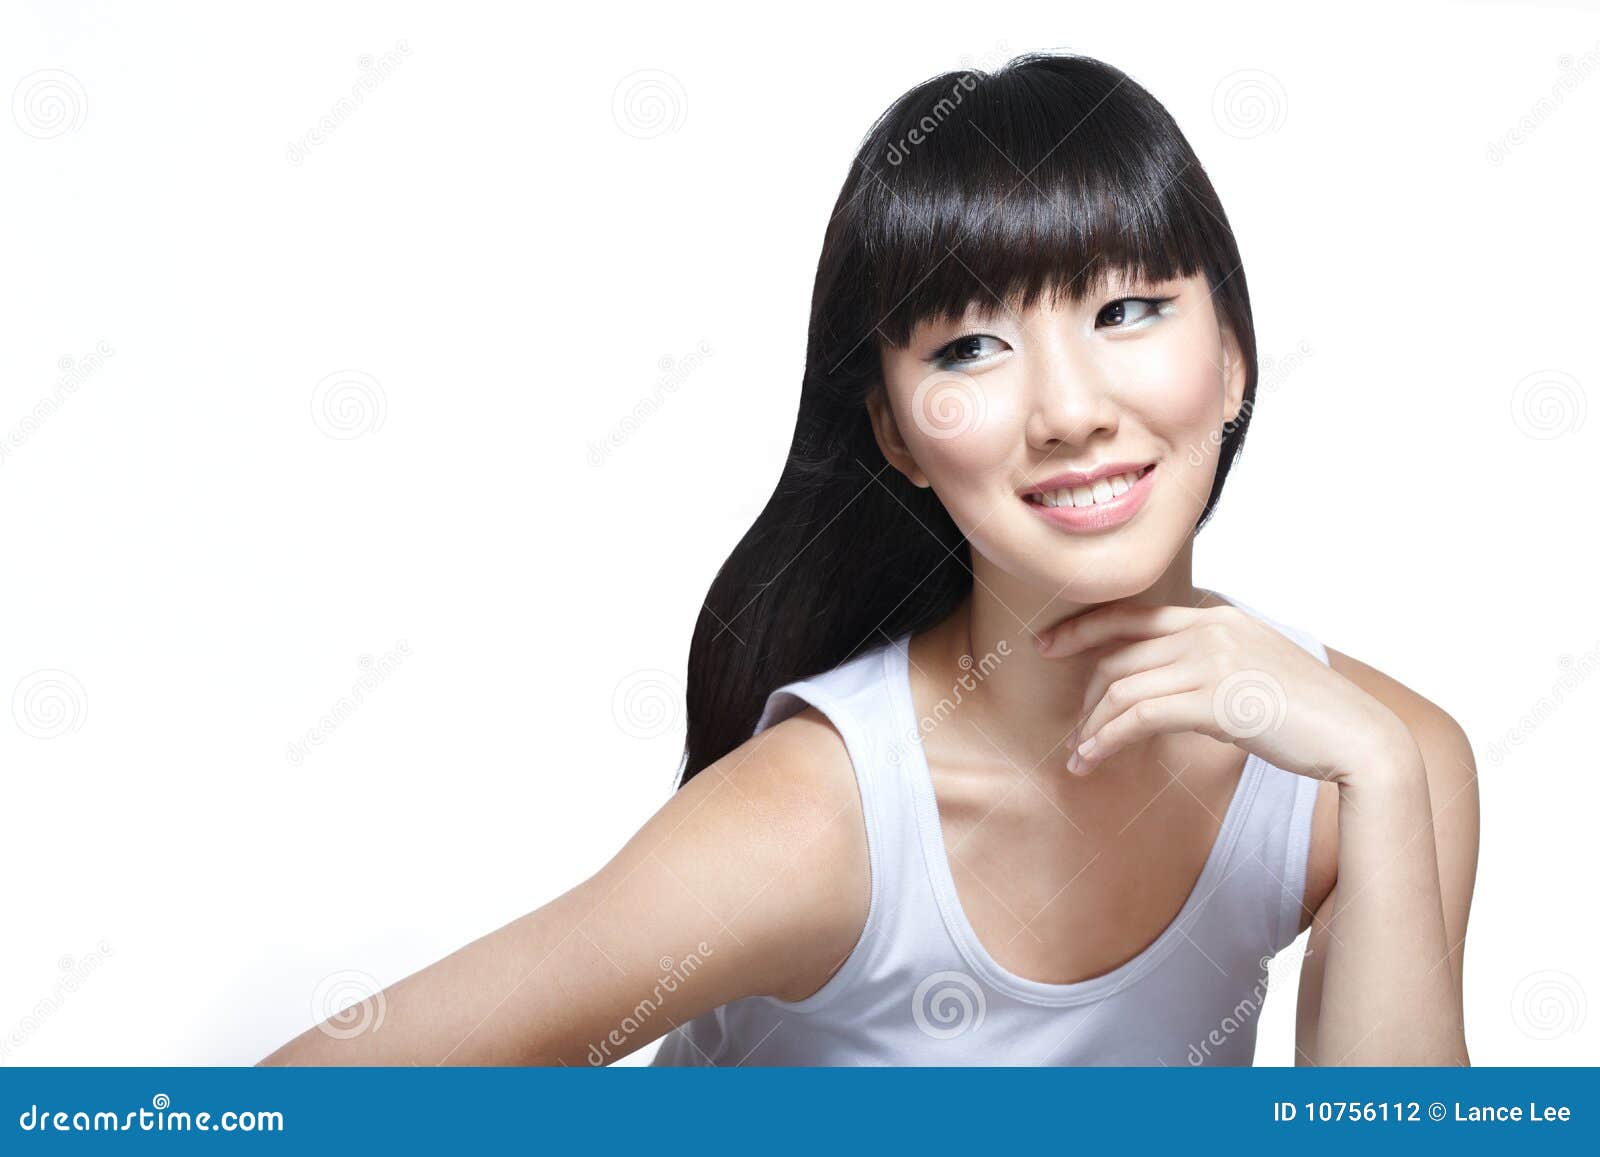 Chinese Fashion Beauty Model Looking Radiant Stock Photo Image Of